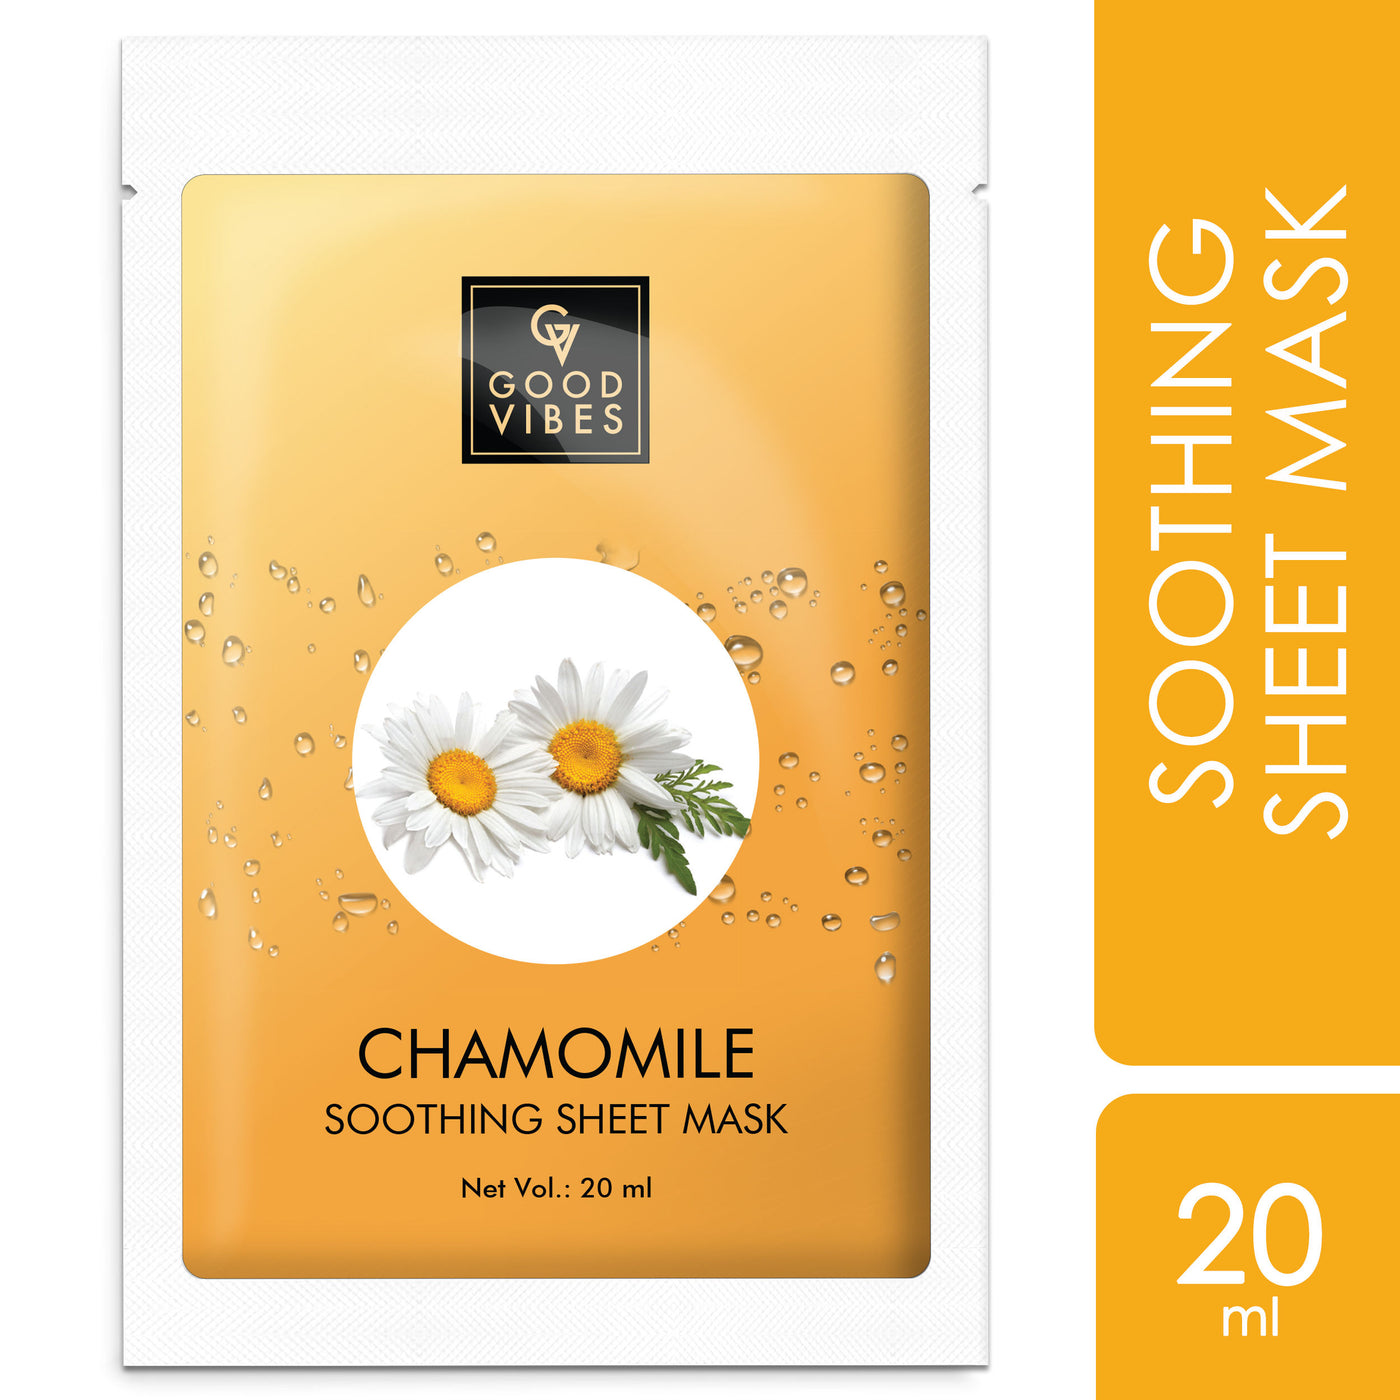 Good Vibes Soothing Sheet Mask - Chamomile (20 ml) - 1